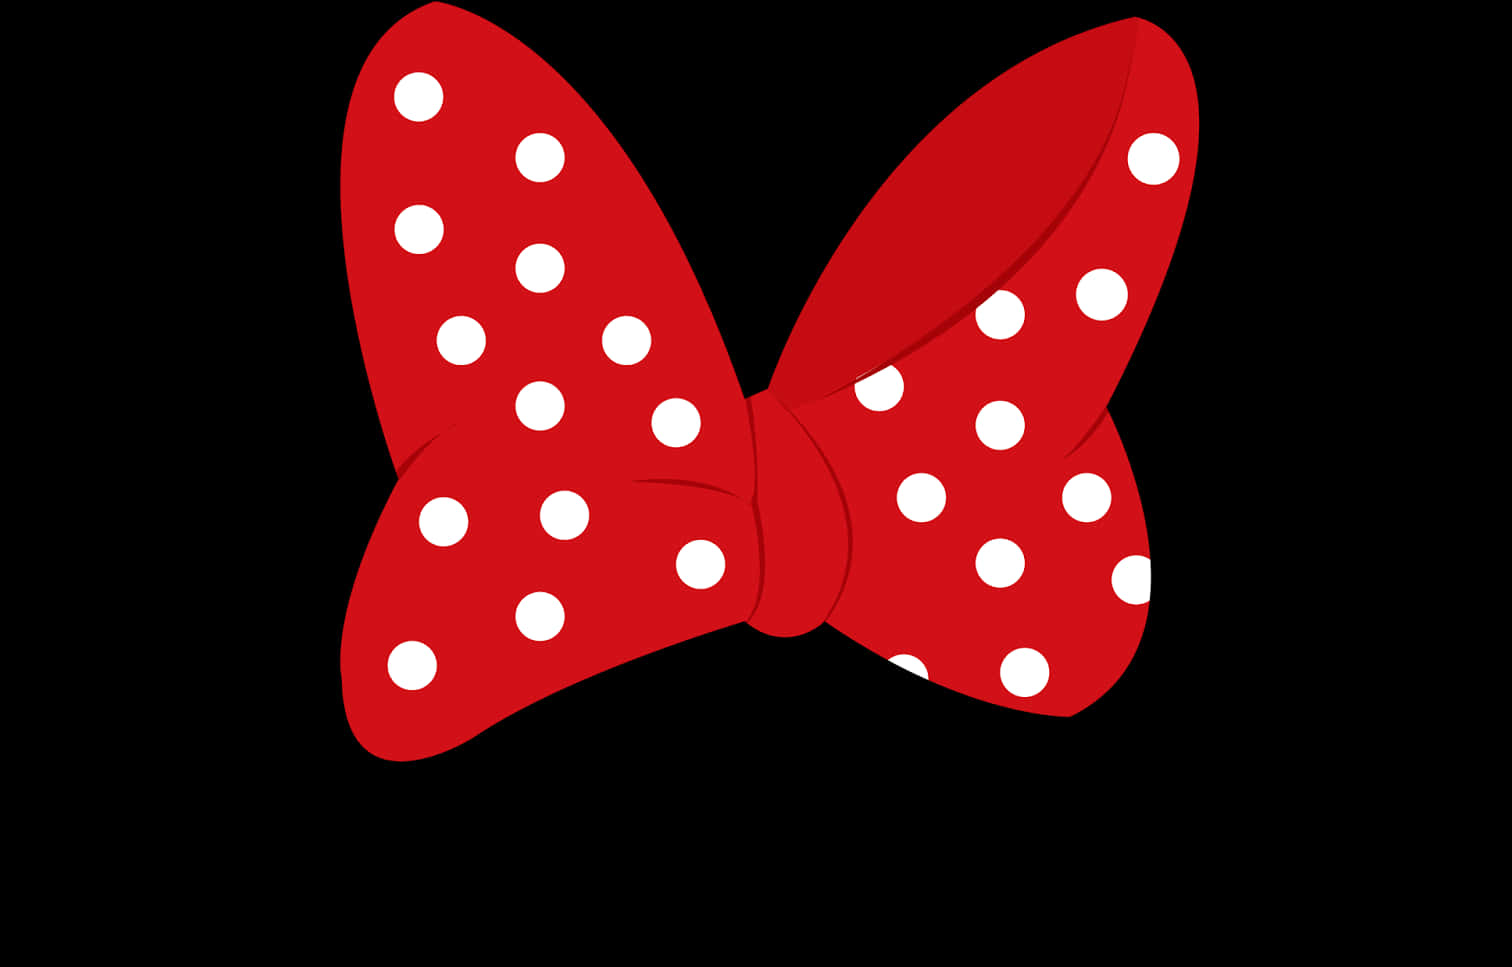 Red Polka Dot Bow Illustration PNG